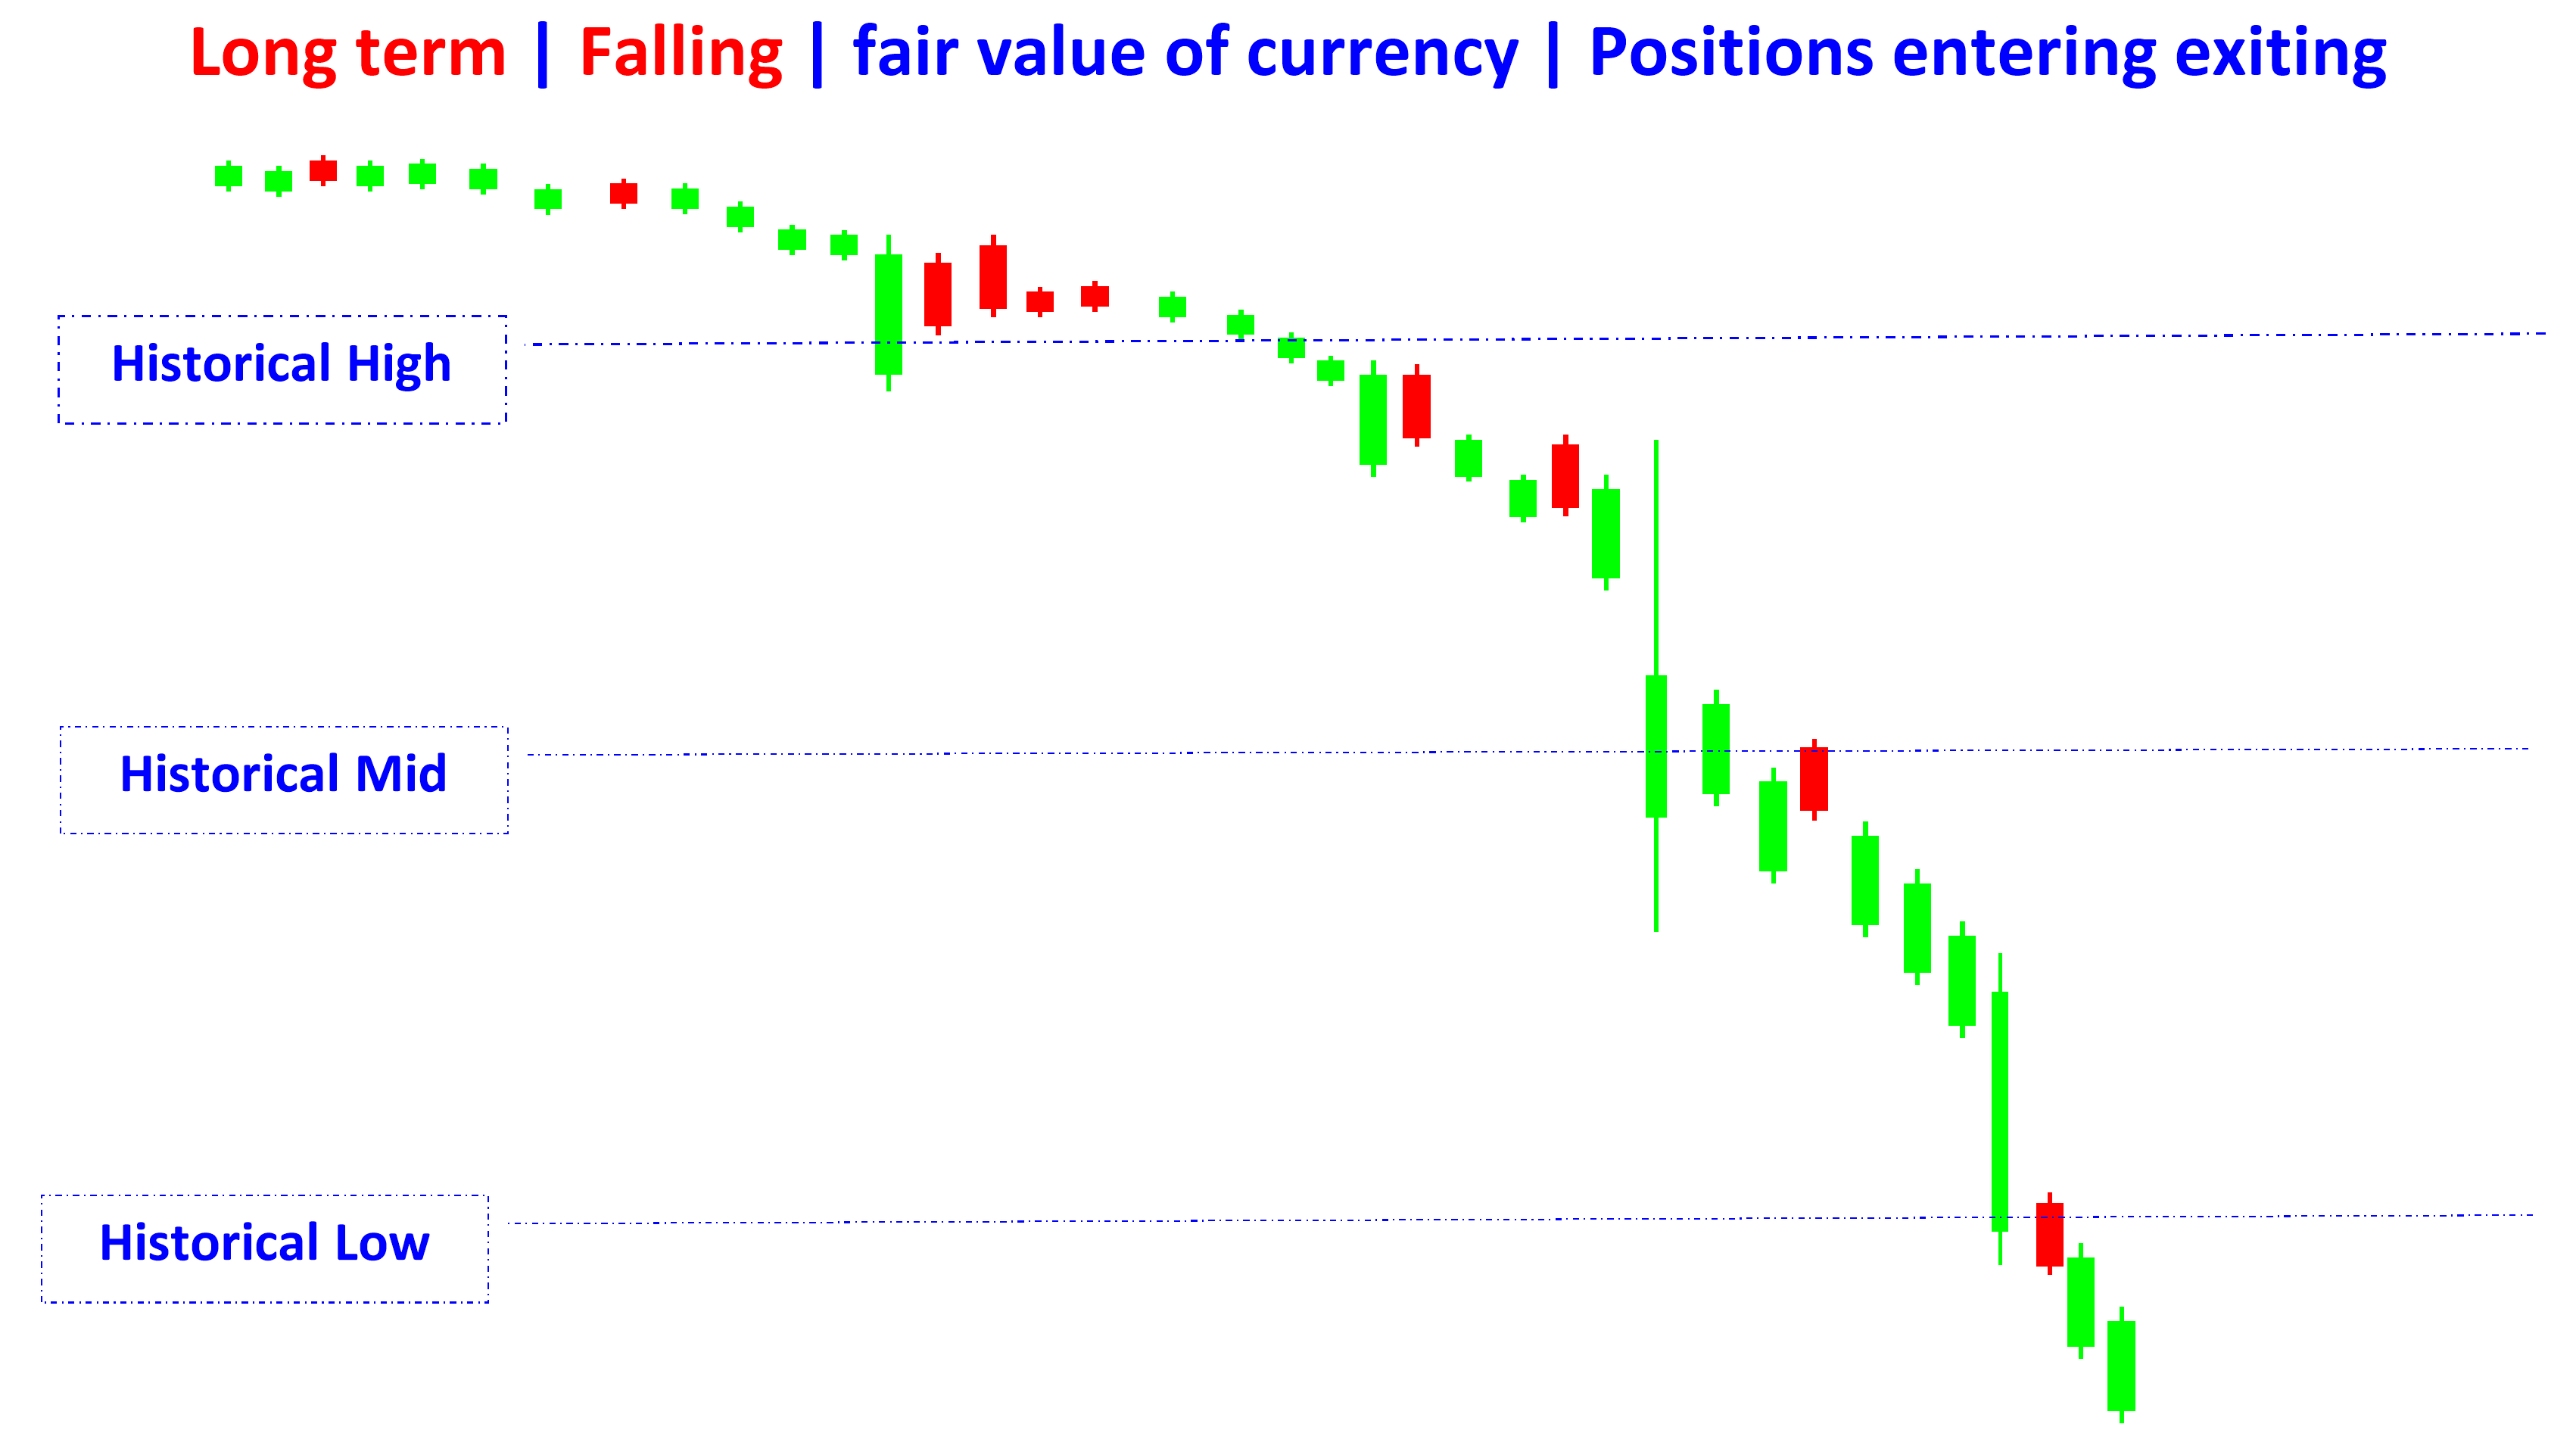 fair value indicators of currency in long terms falling en